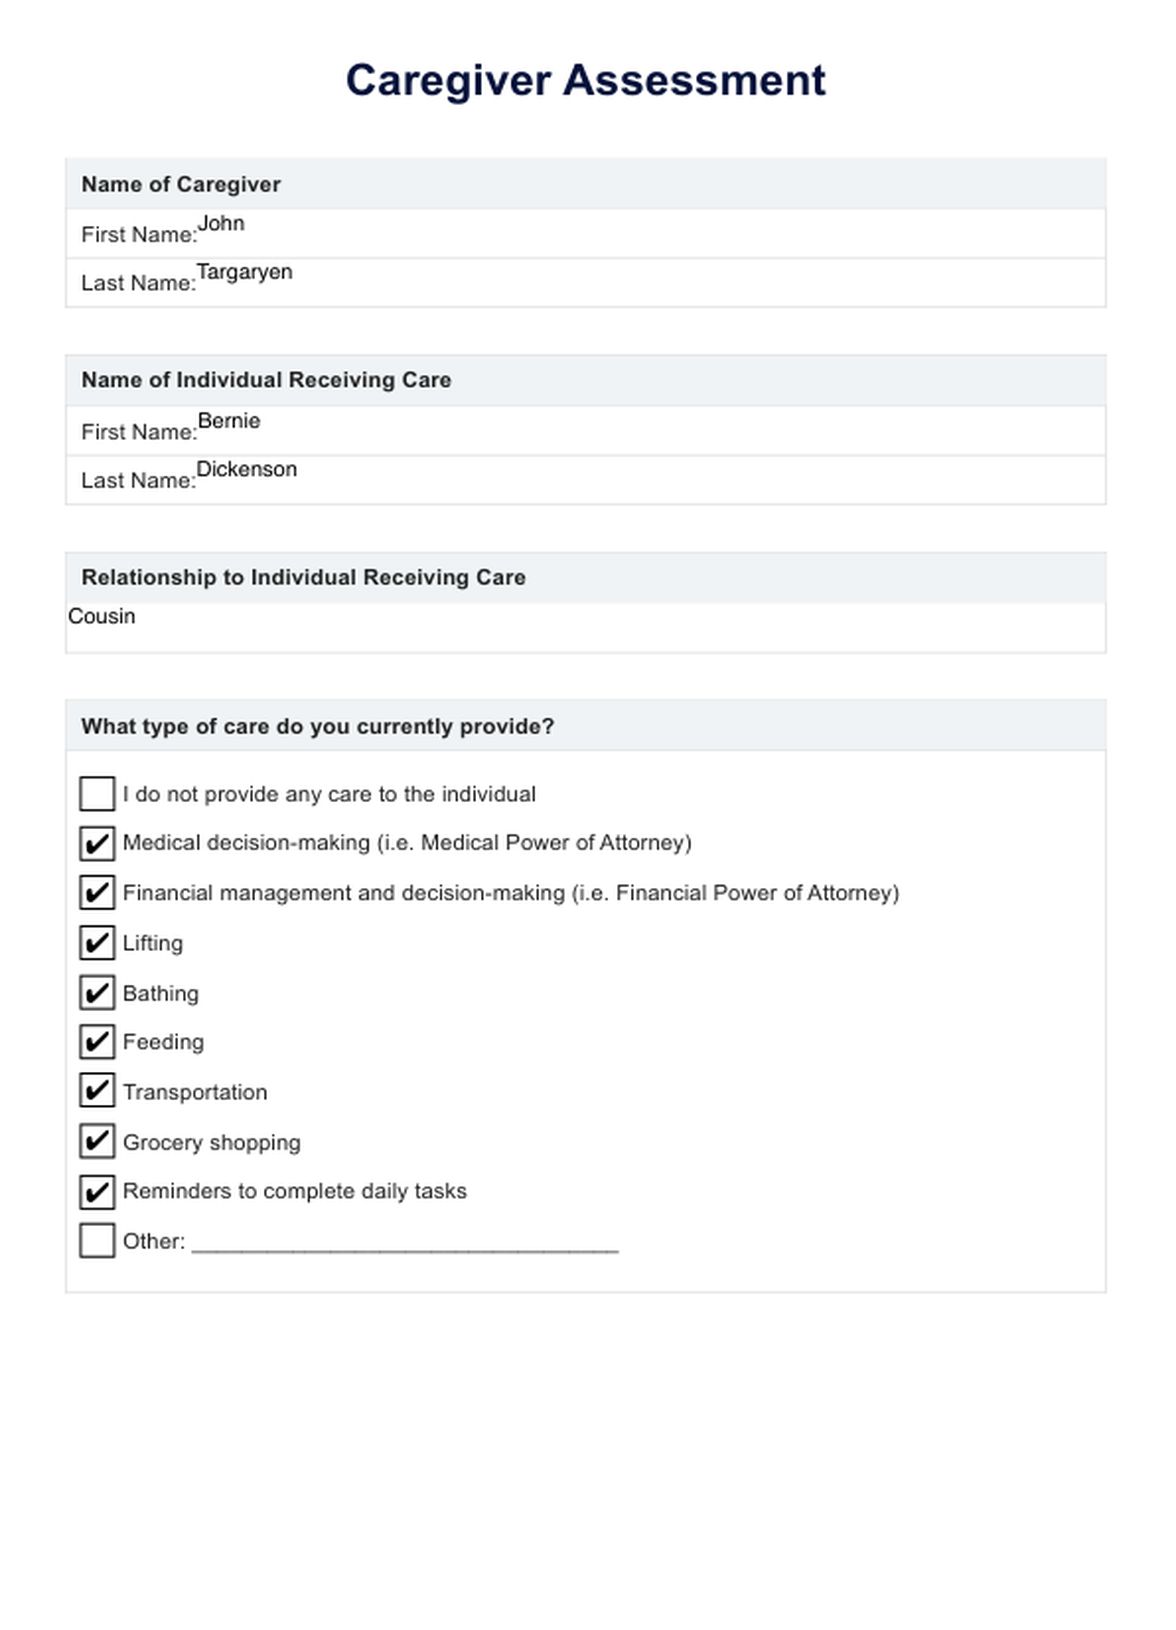 Caregiver Assessment PDF Example